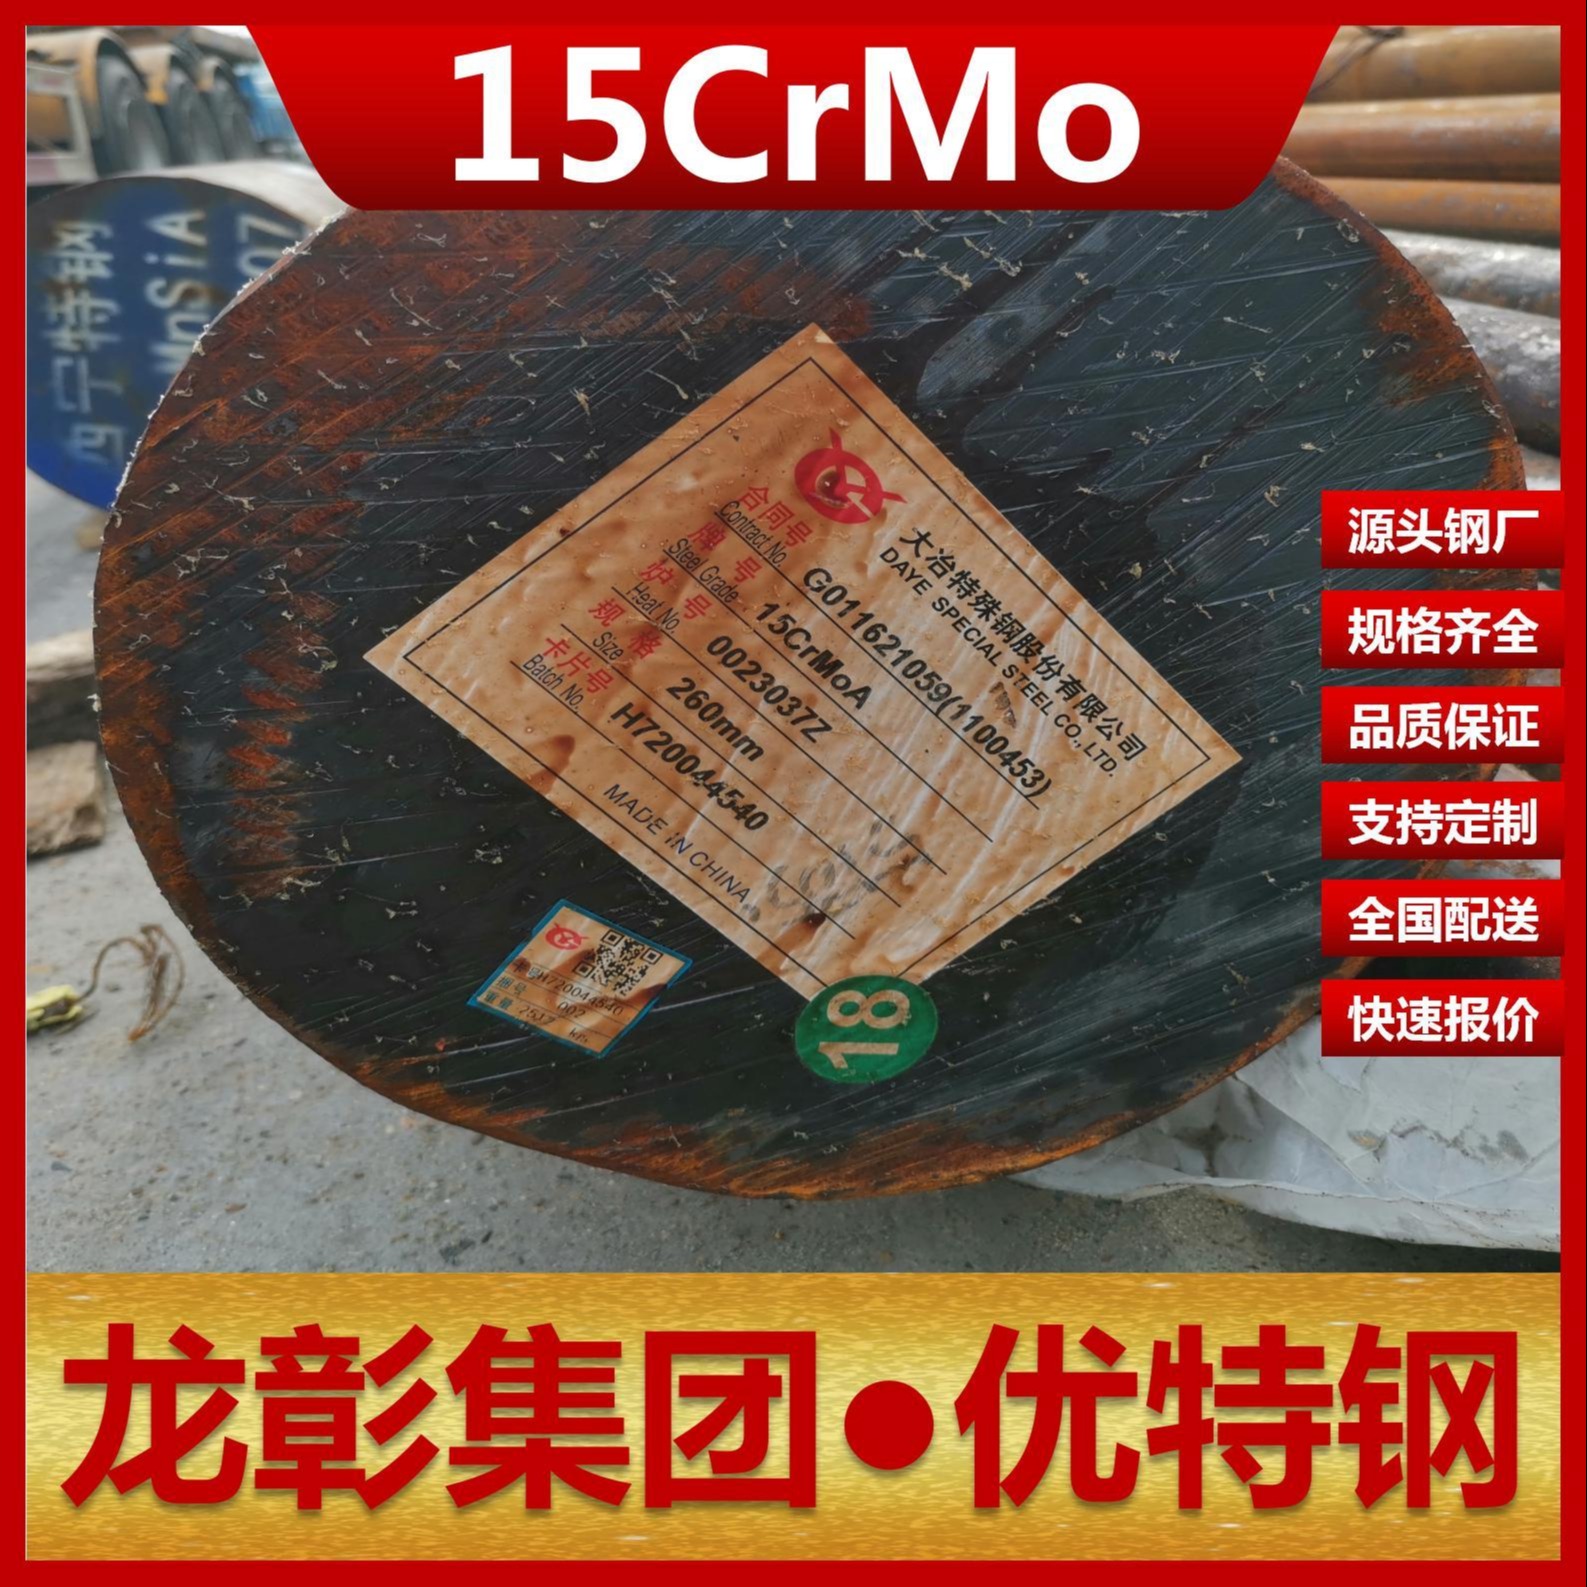 15CrMo圆钢现货批零 龙彰集团主营15CrMo圆钢棒支持定制锻件图片